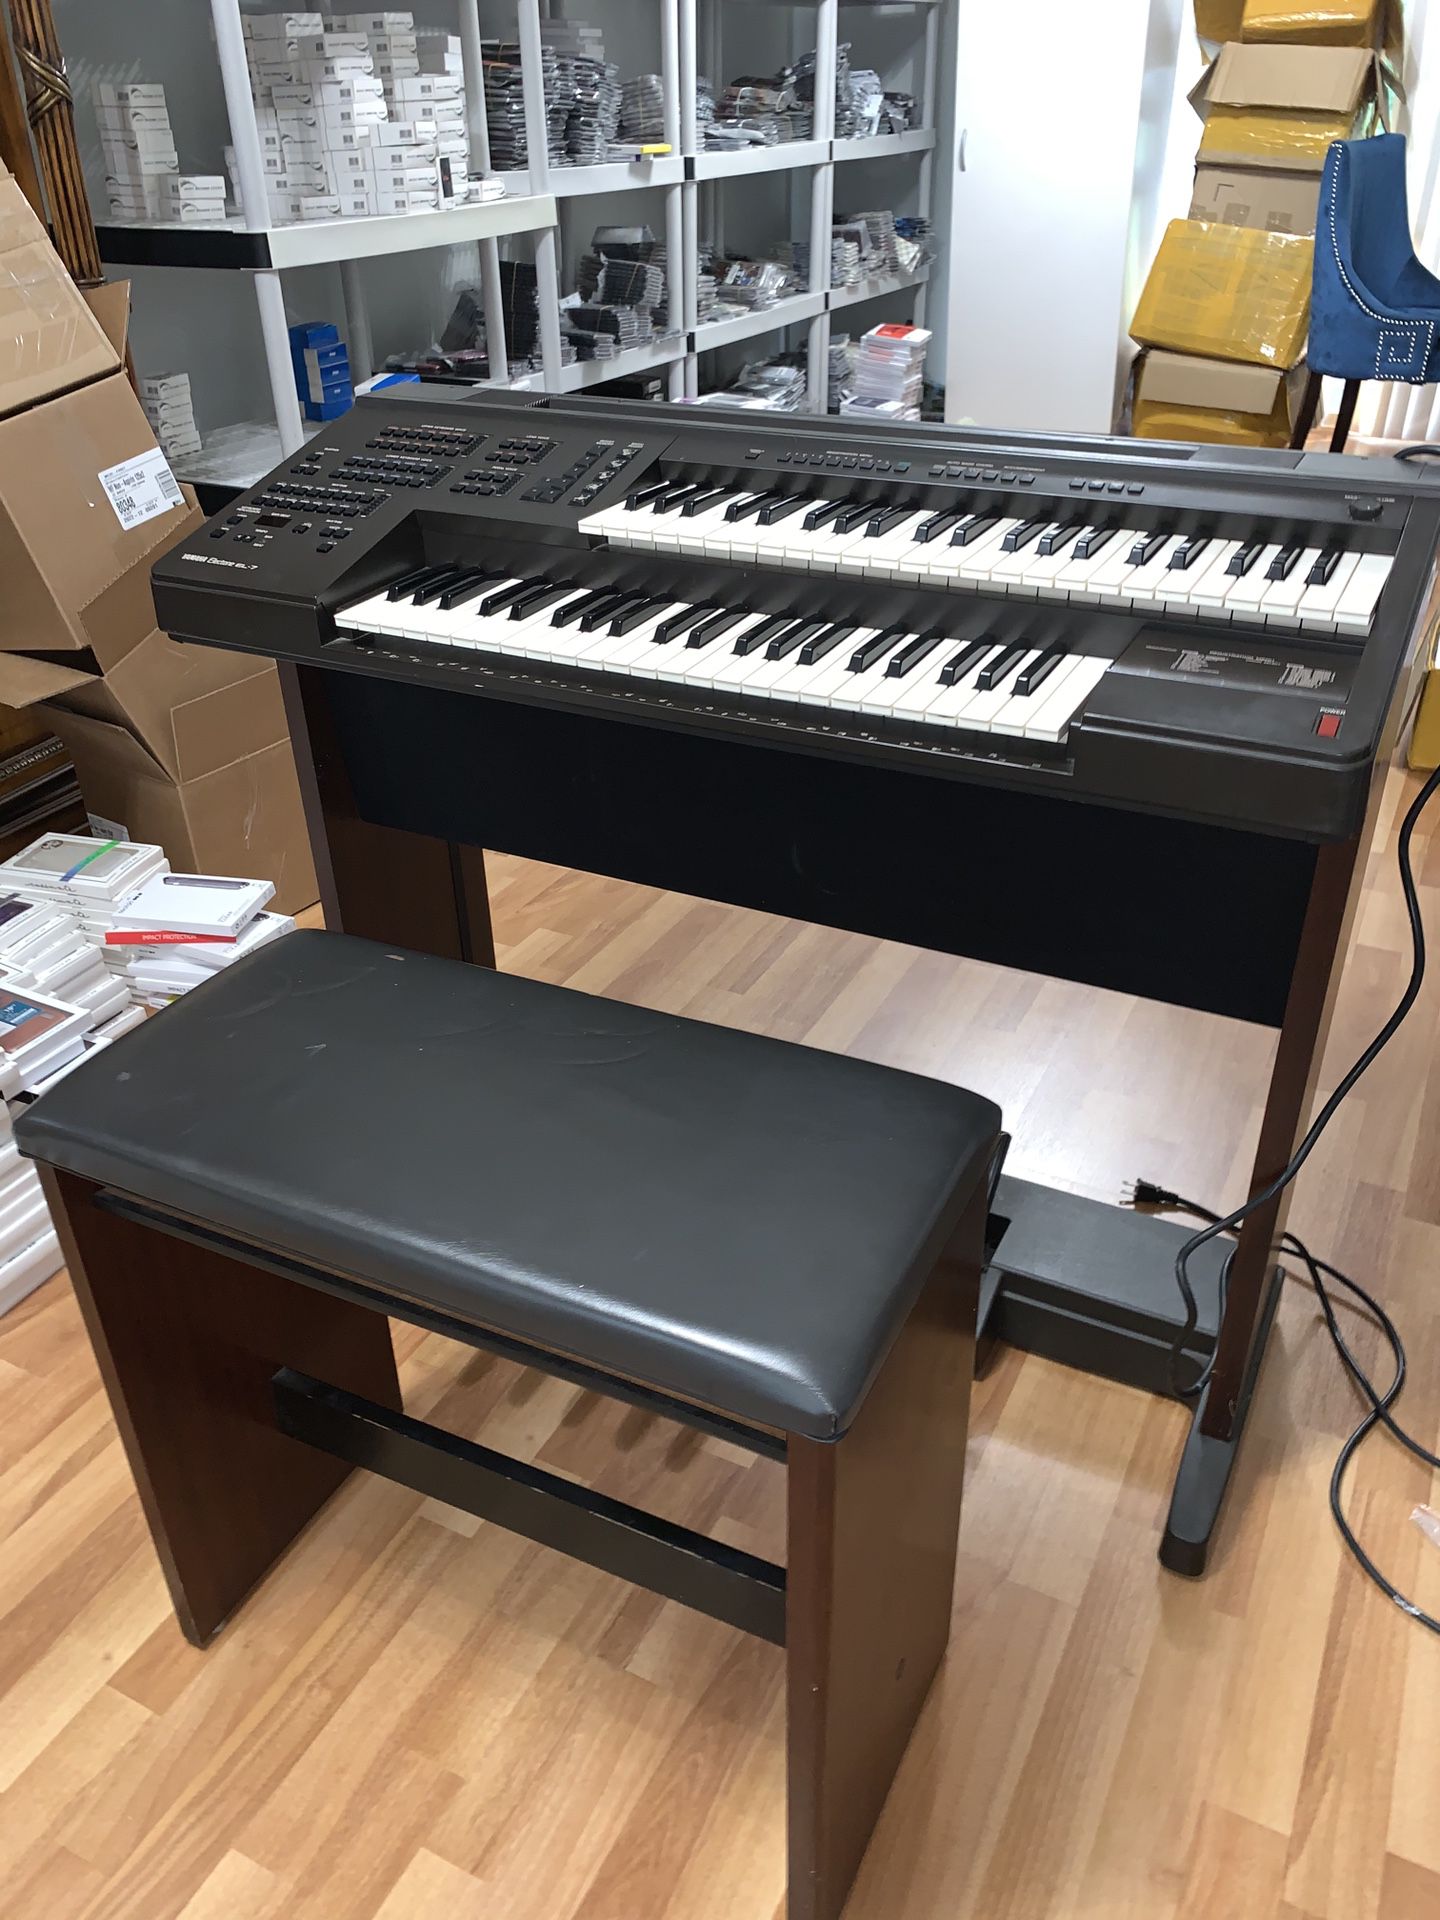 Mini Yamaha piano set